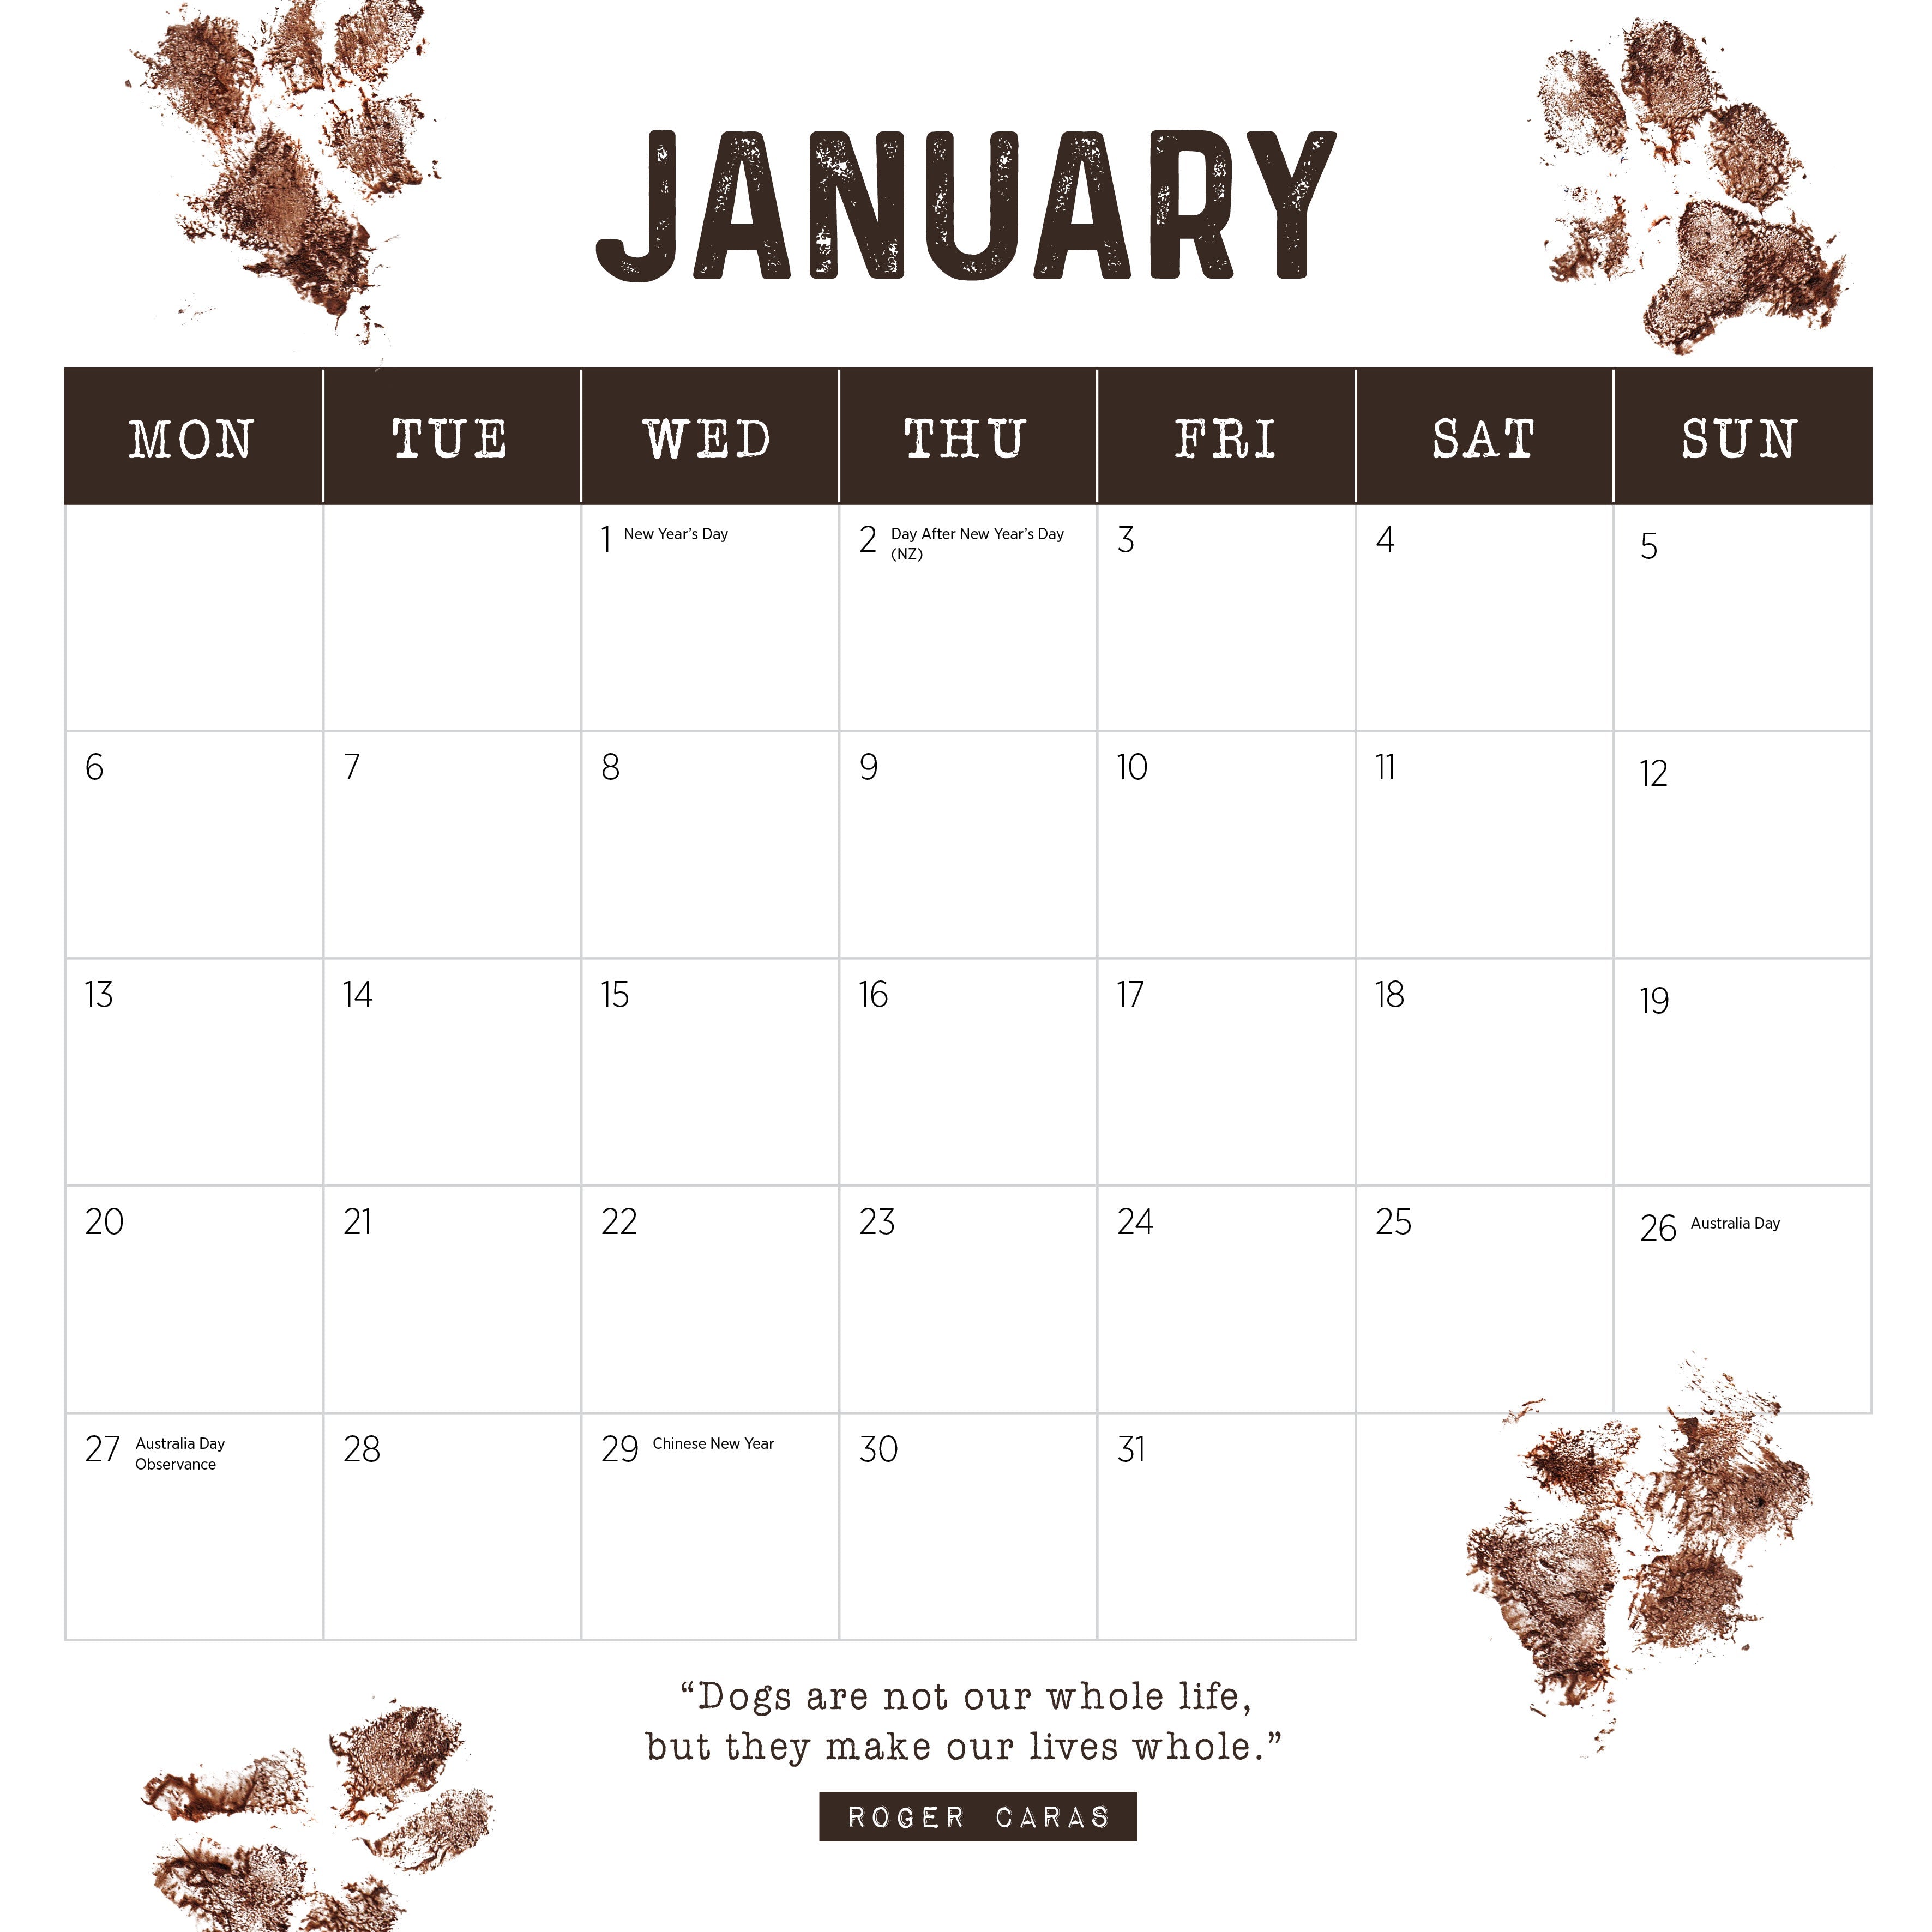 2025 Farm Dogs - Square Wall Calendar